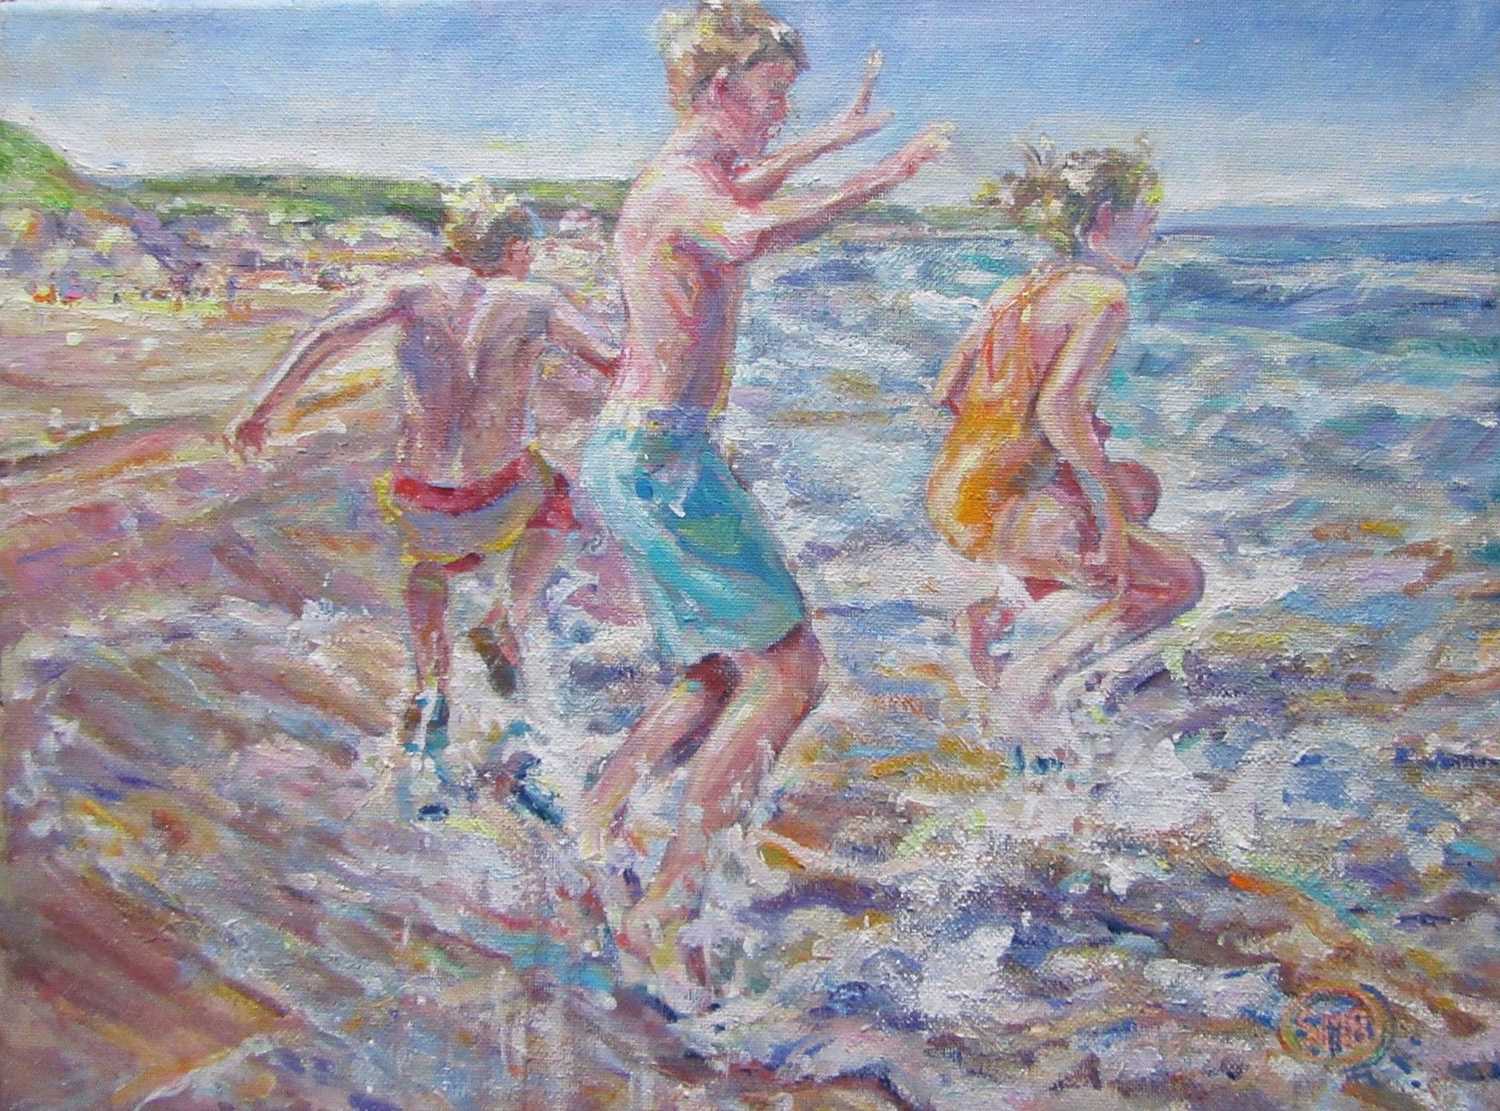 Susan M Barber. “Enjoying the waves”. Acrylic on canvas. 33cms x 43cms